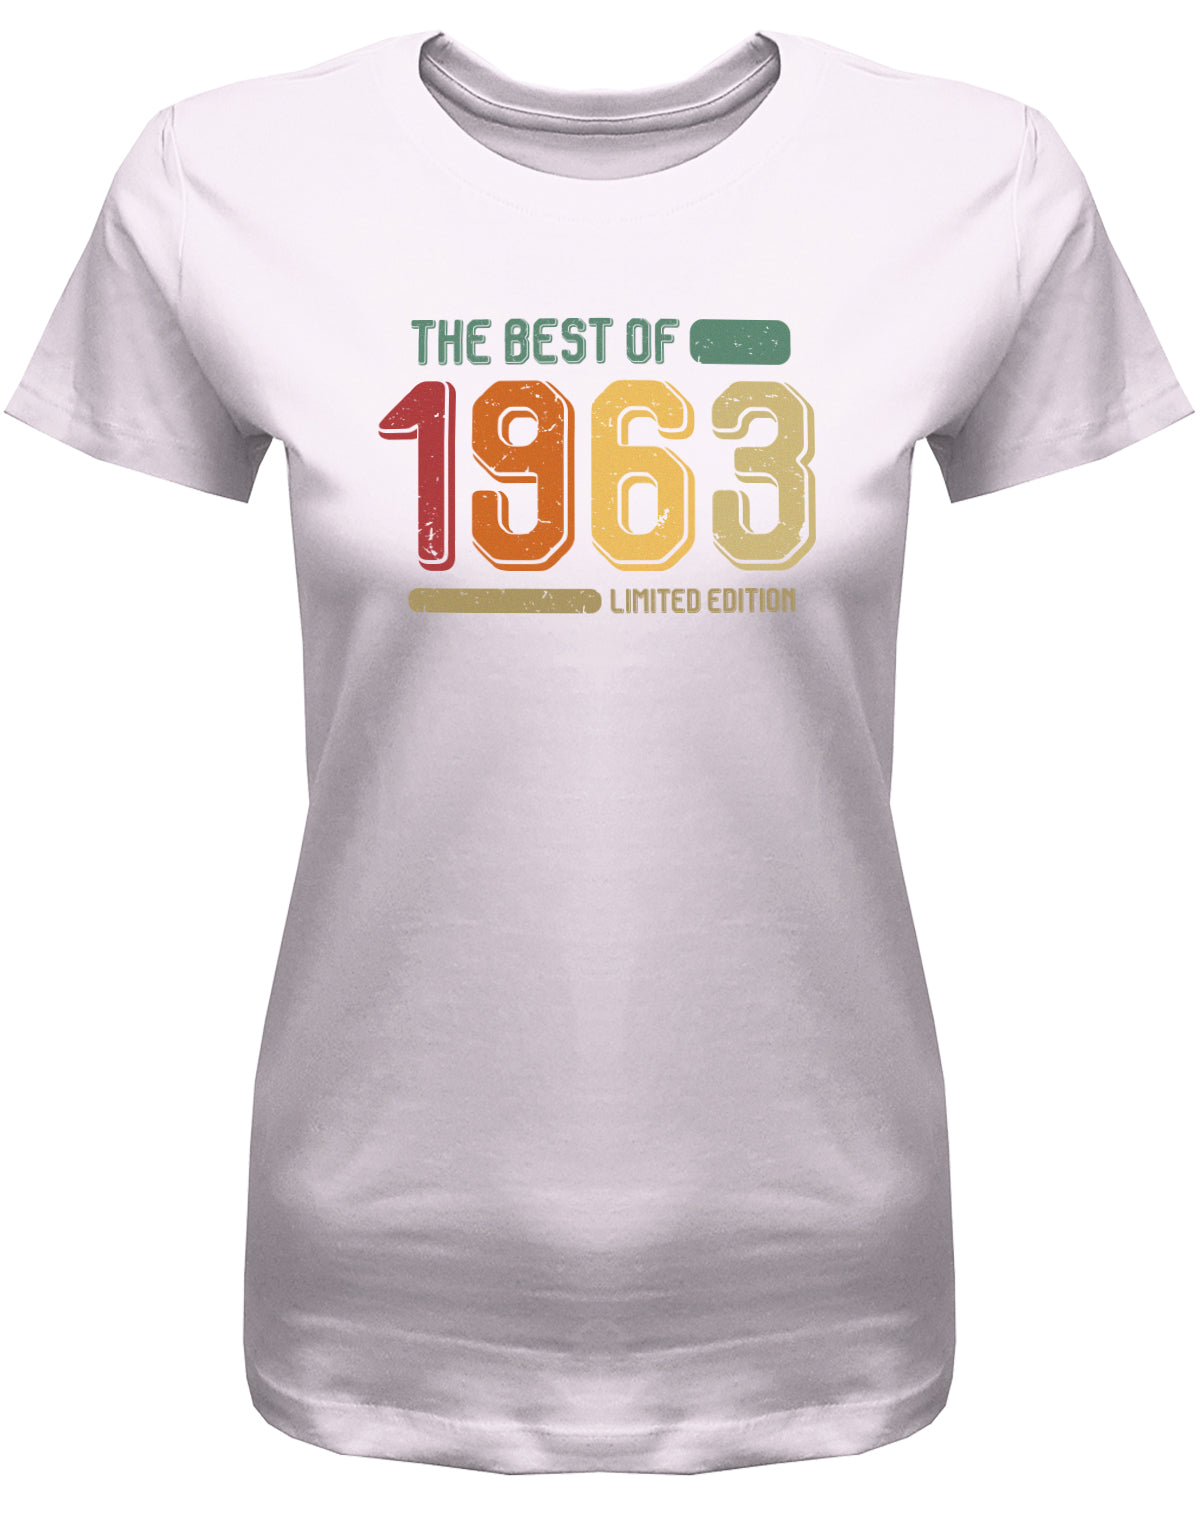 The Best of 1963 Limited Edition Retro Vintage - Jahrgang 1963 Geschenk Frauen Shirt